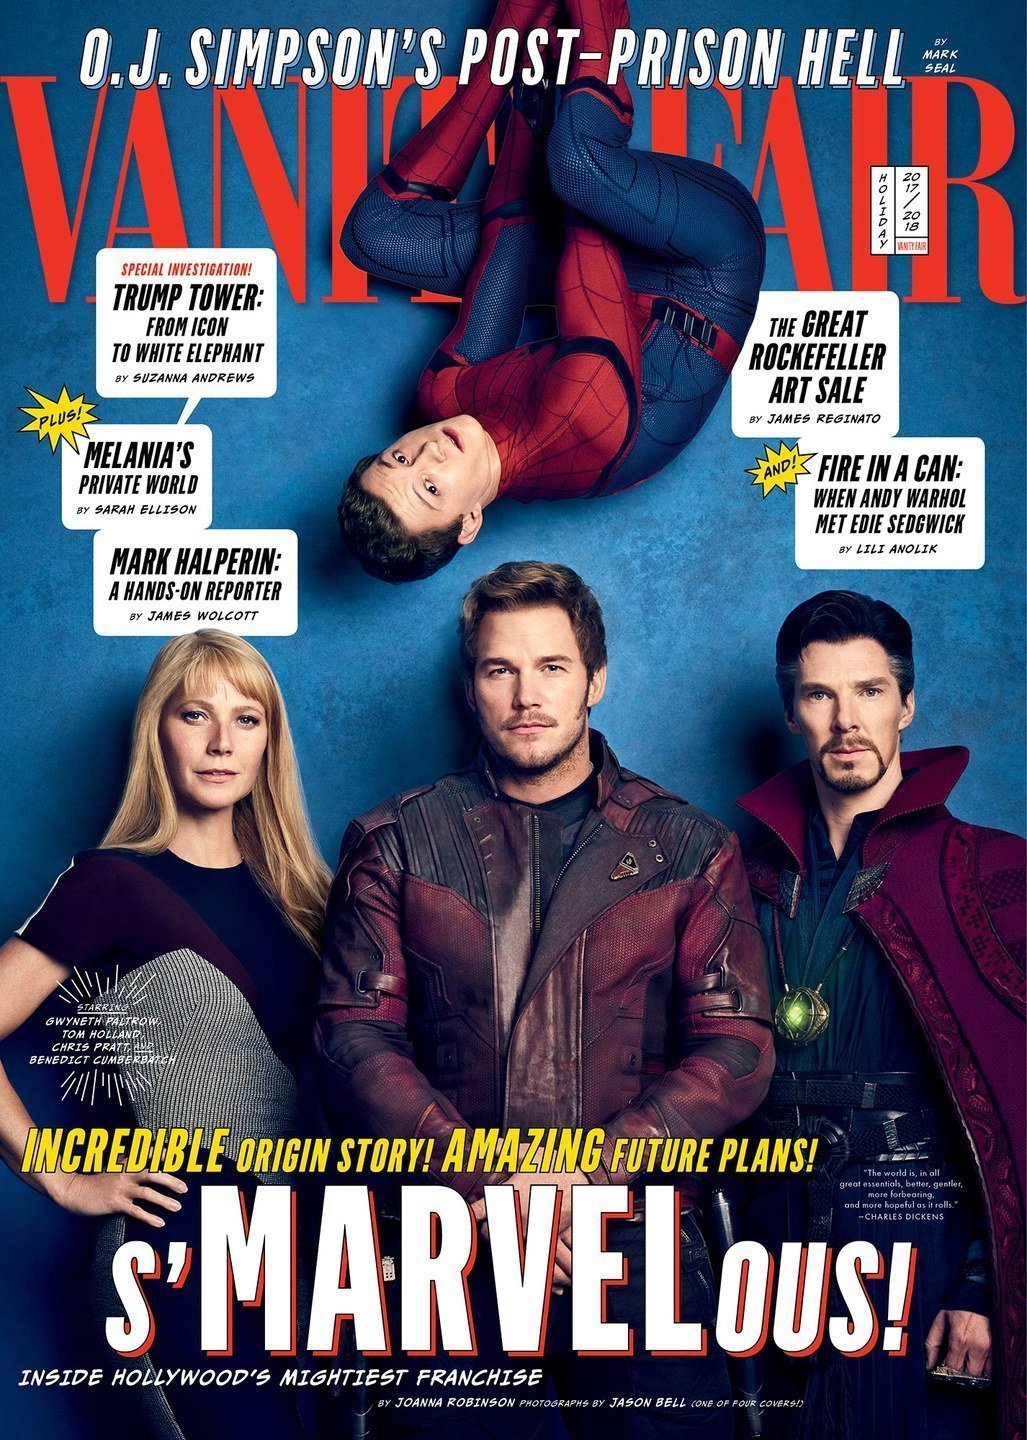 Couverture de Vanity Fair avec Spider-Man, Pepper Potts, Star-Lord et Doctor Strange